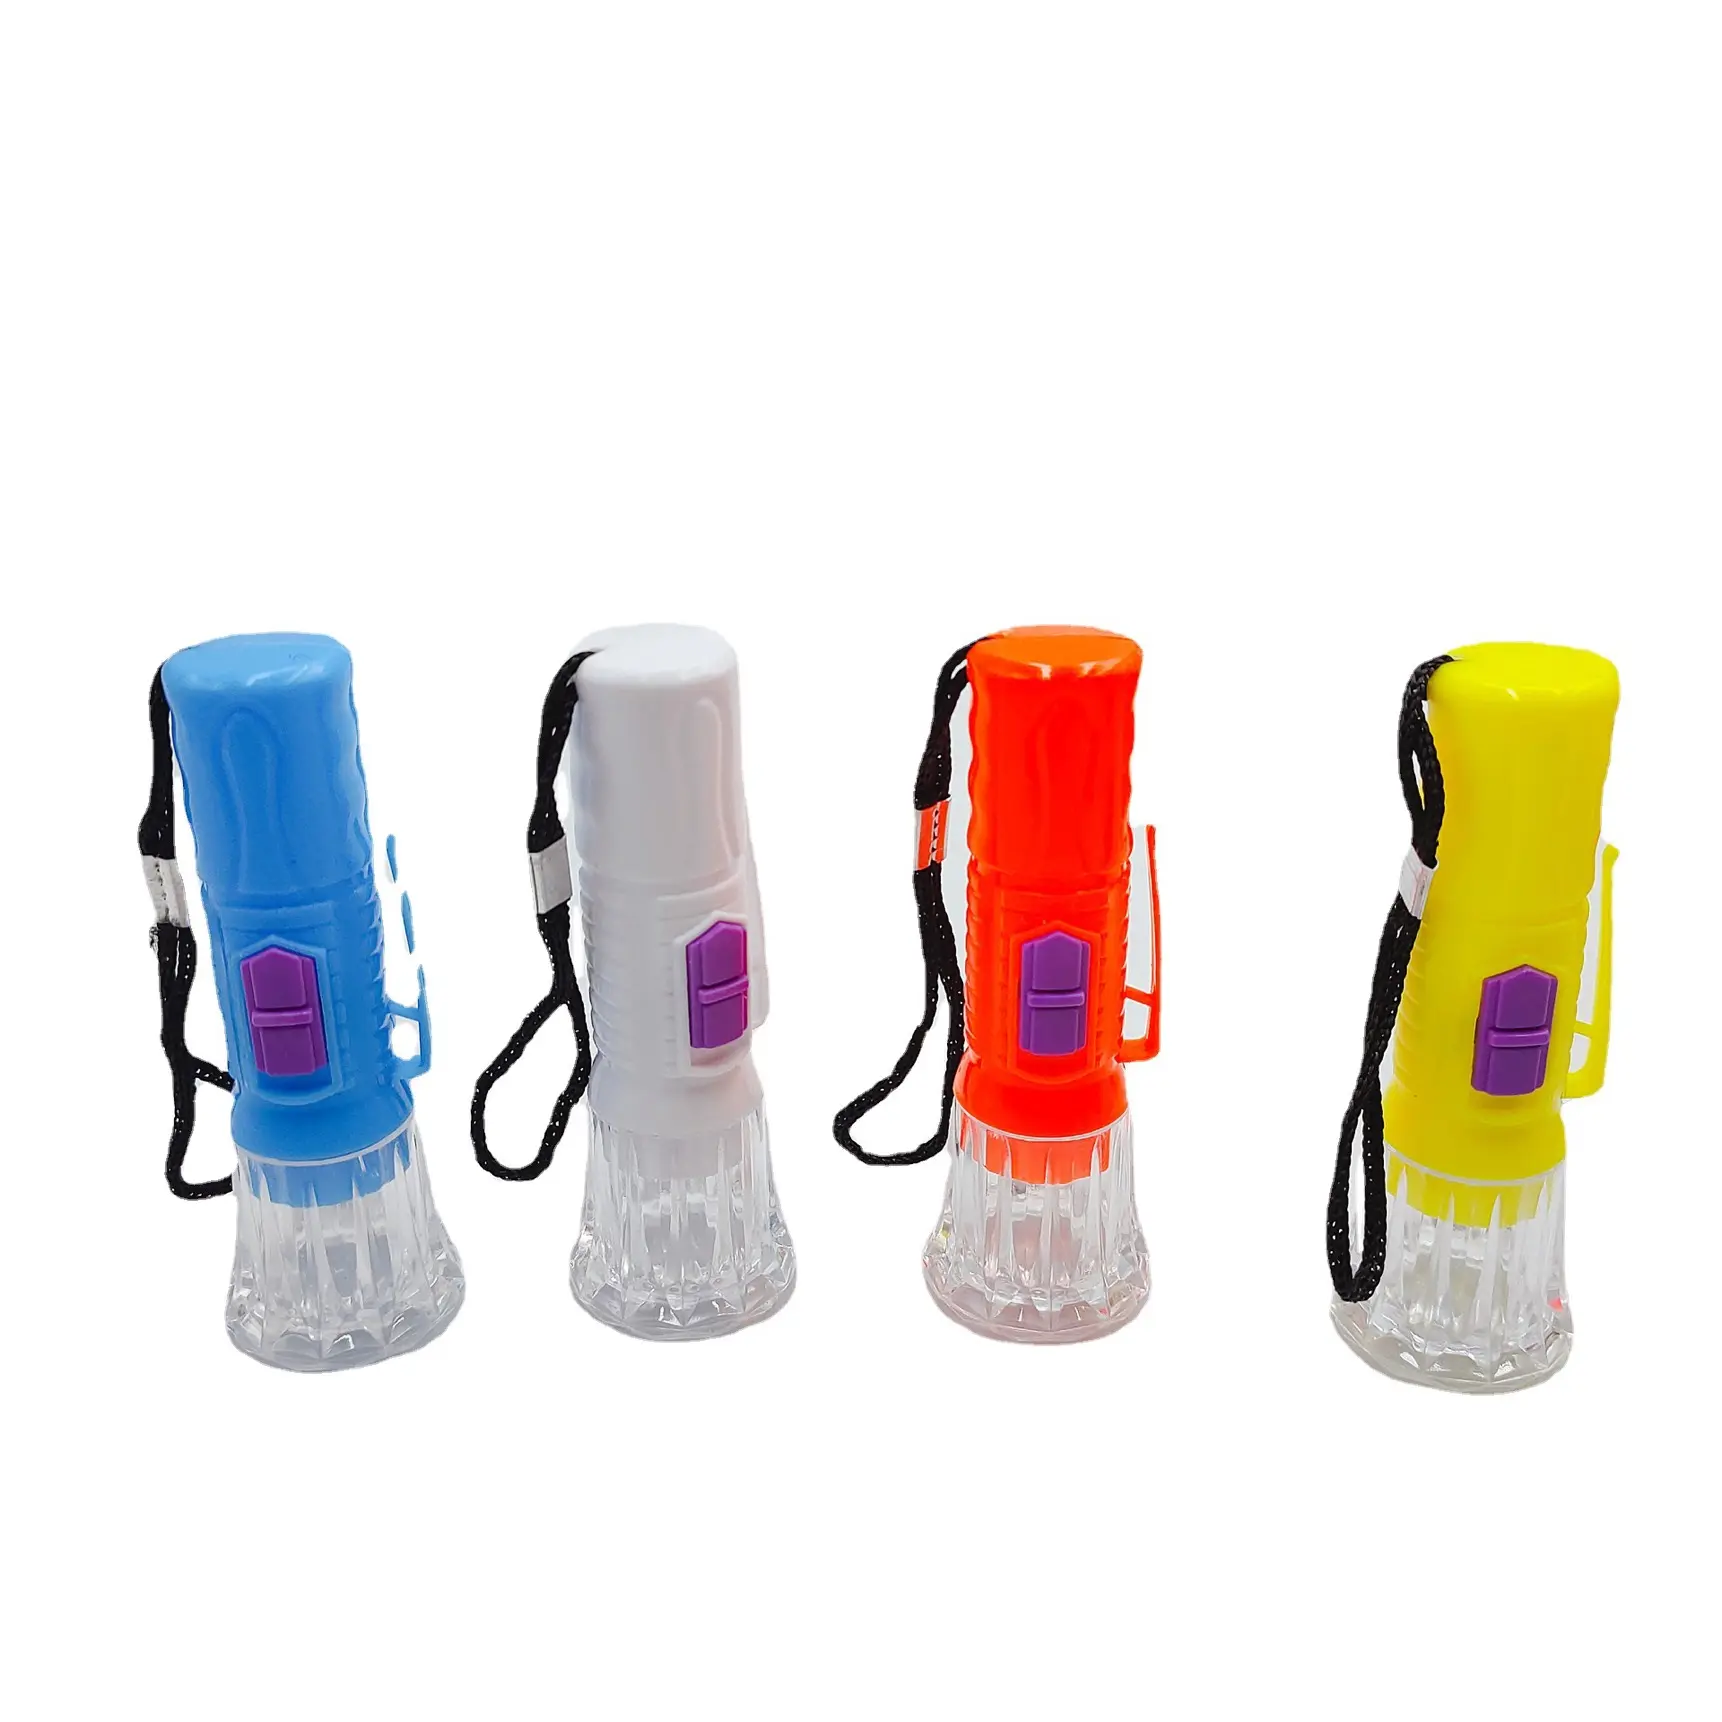 Cheap LED Flashlight ABS Plastic Pocket Size Gift Waterproof Torch Lamp Portable Lights Keychain Mini Flashlight